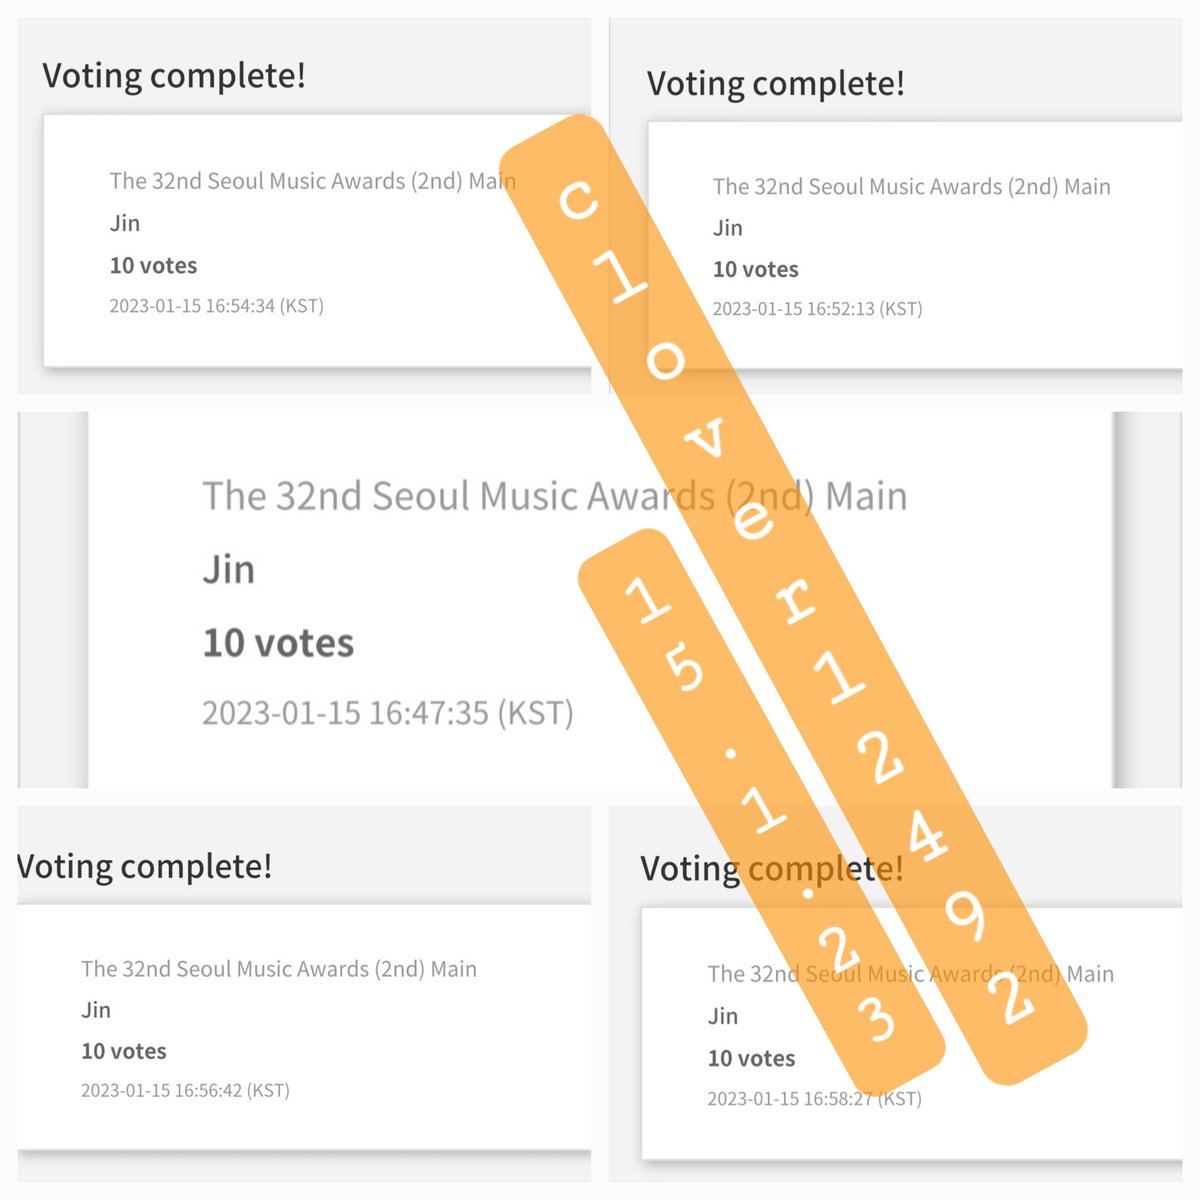 Done ✅️🫡👨‍🚀
Thank you 😊

FINAL MASS VOTING FOR JIN 
#VoteJinOnSMANow